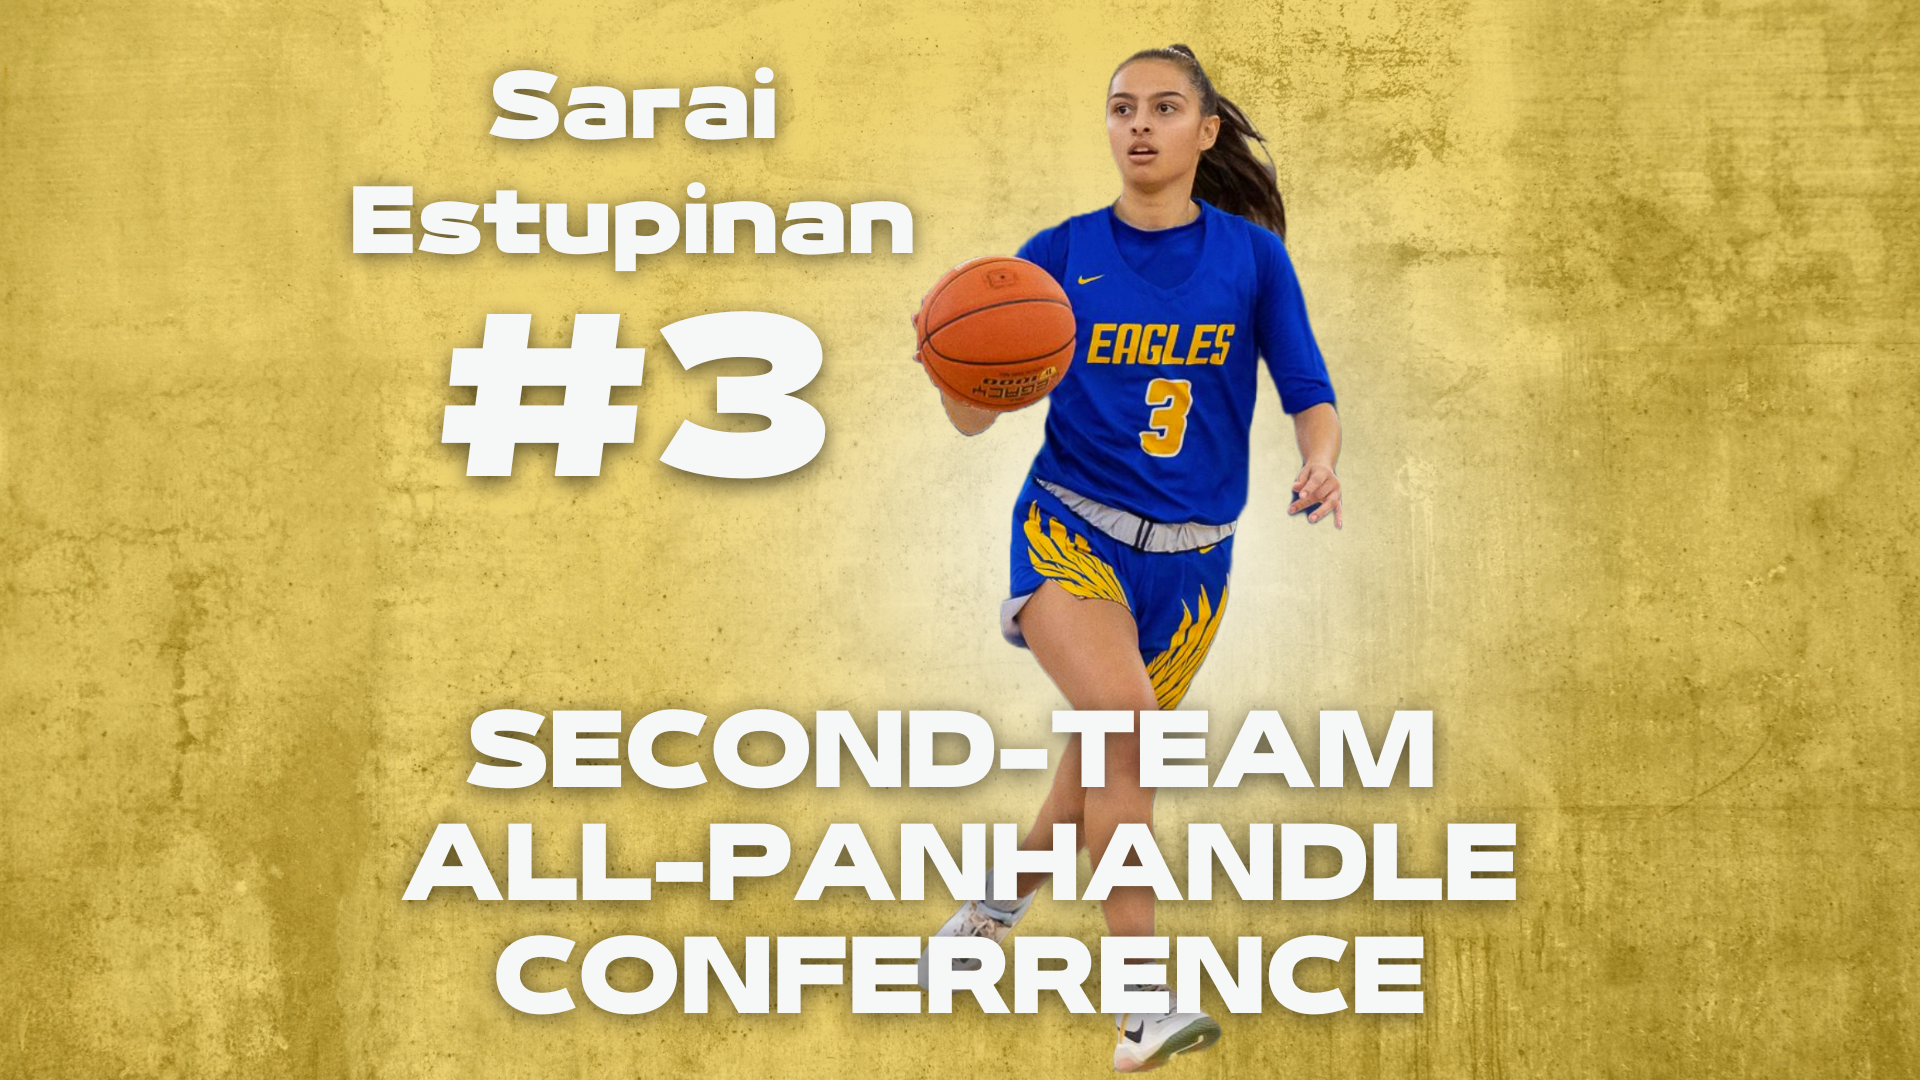 Sarai Estupinan receives Second-Team All-Panhandle Honors